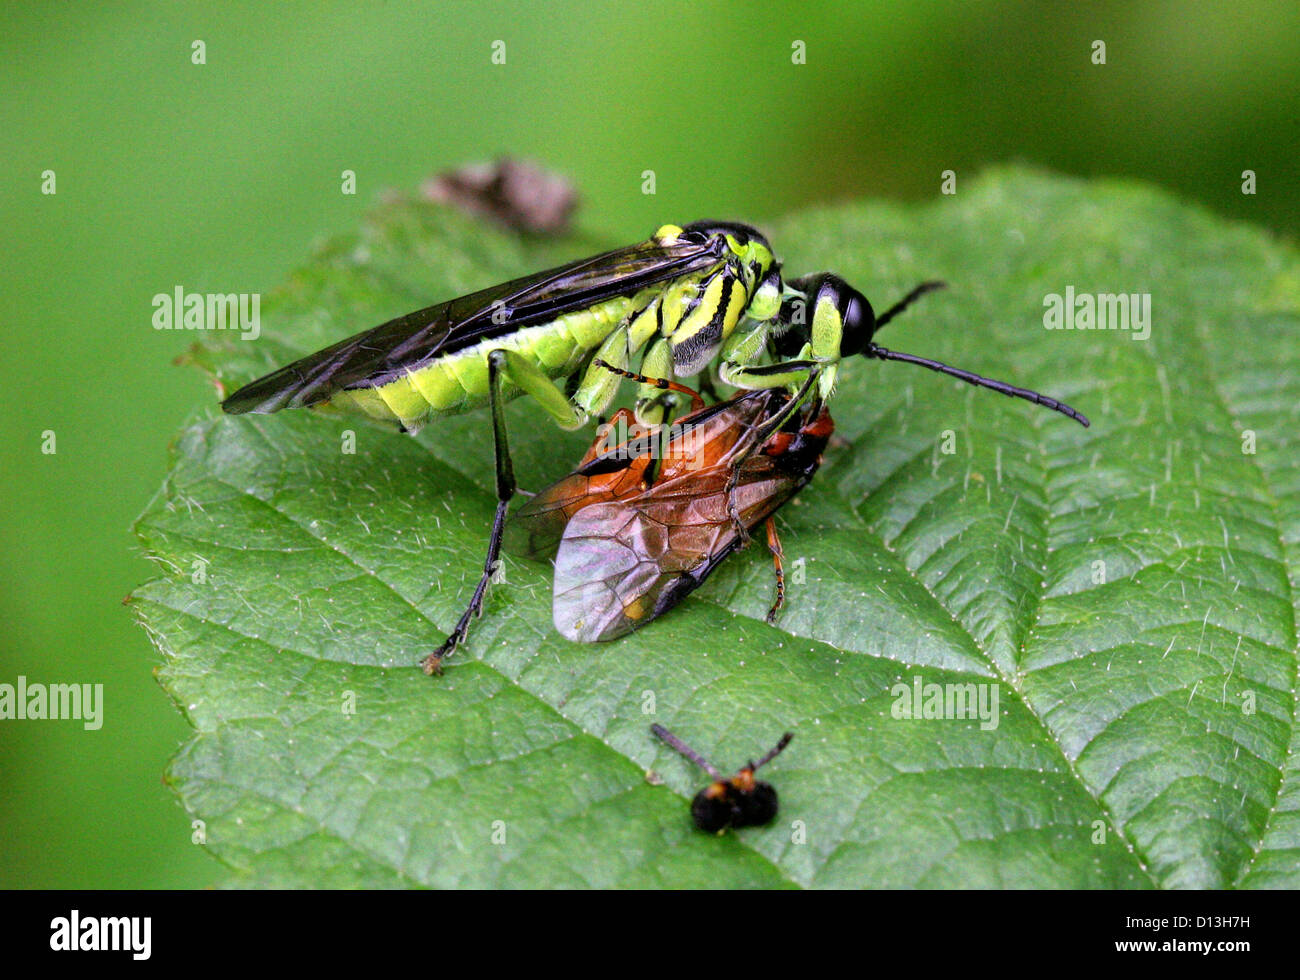 Lime Green Sawfly, Tenthredo mesomela, Tenthredinidae, Hymenoptera. Eating a Turnip Sawfly or Coleseed Sawfly, Athalia rosae. Stock Photo